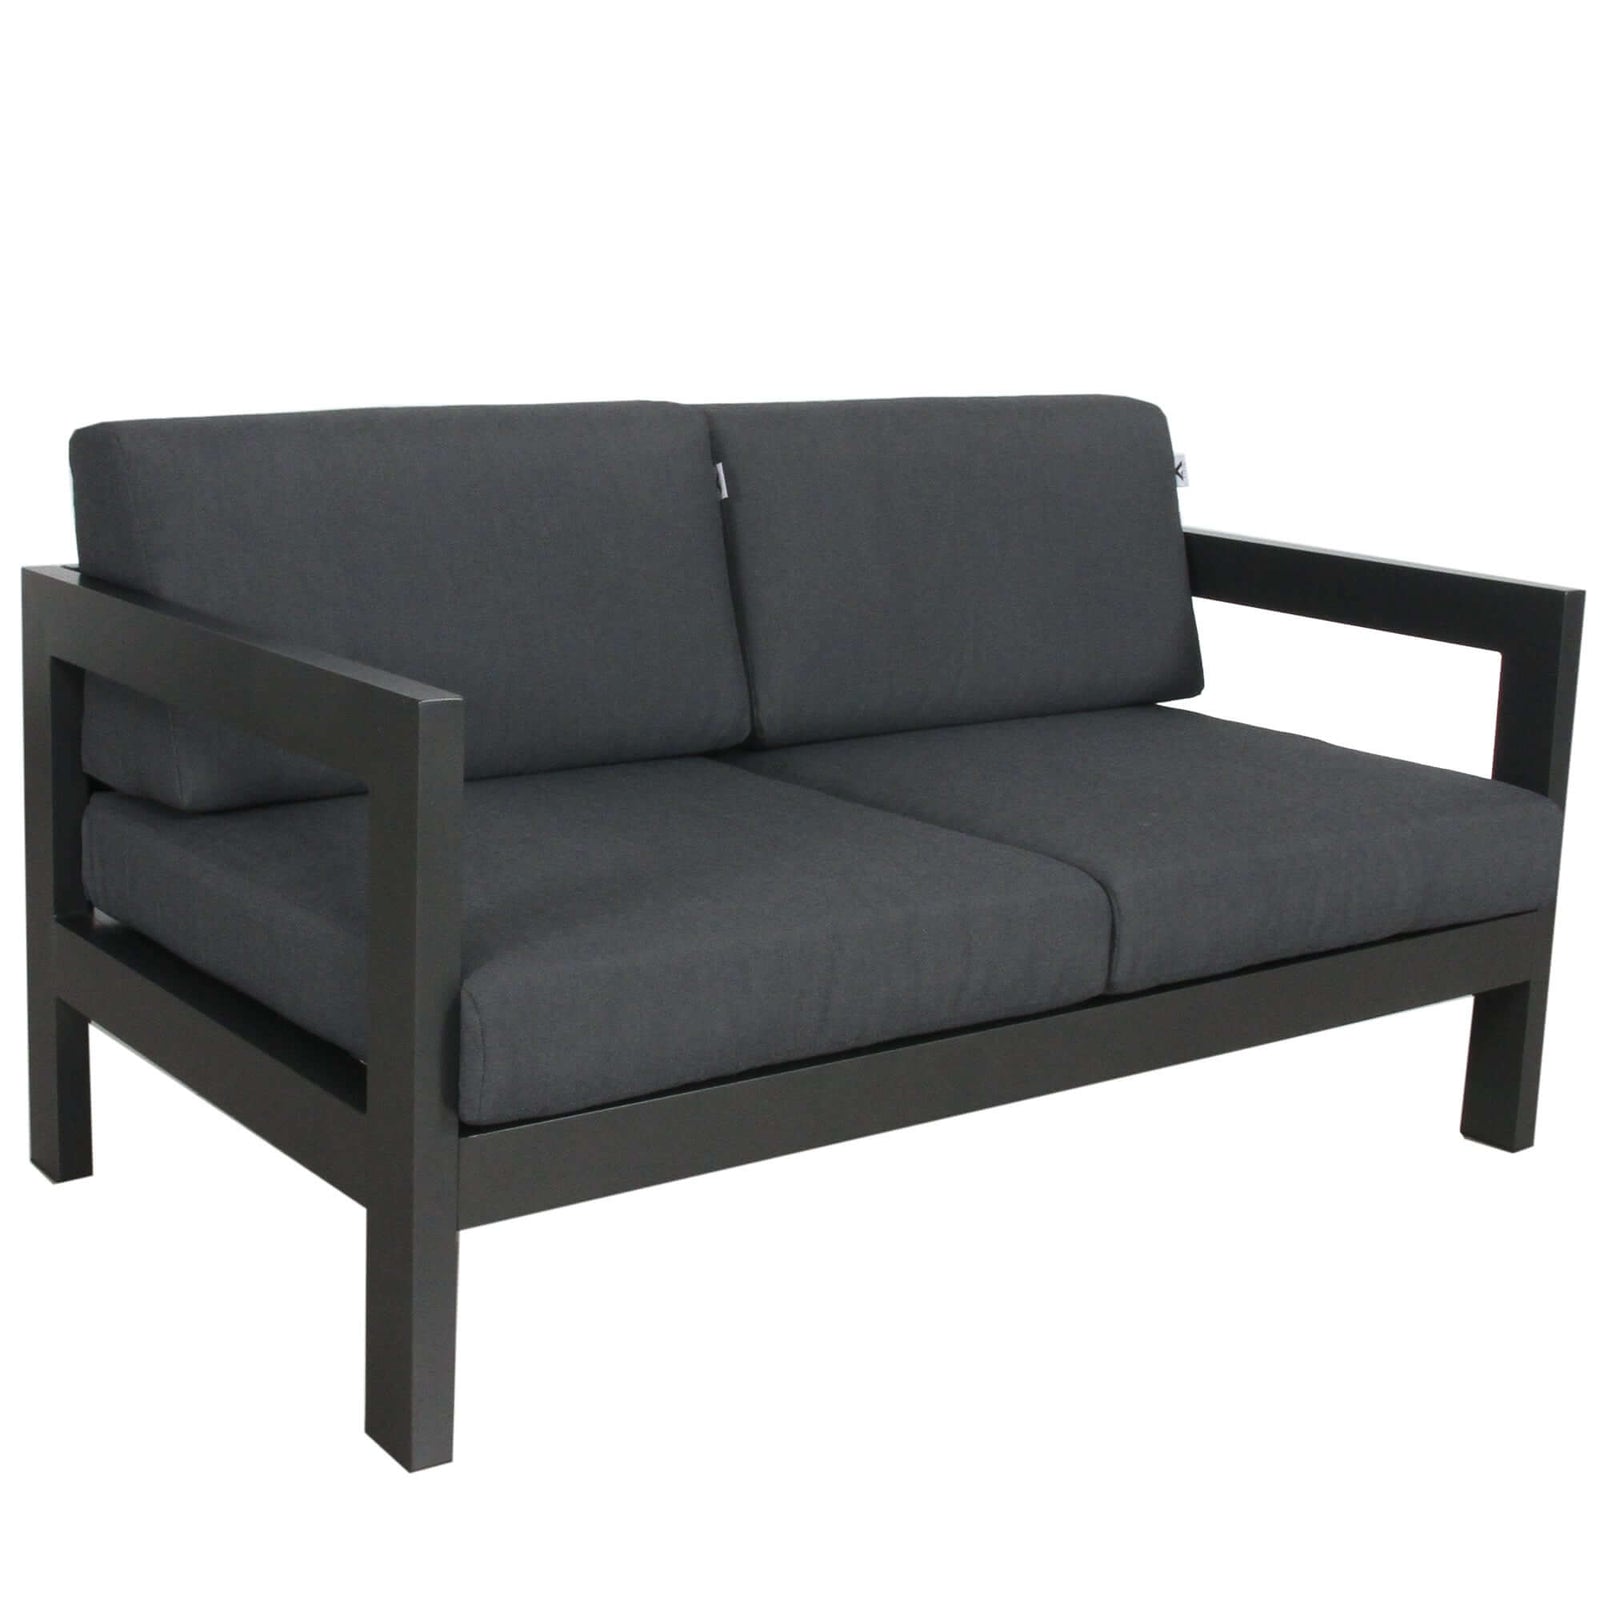 Outie 2 Seater Outdoor Sofa Lounge Aluminium Frame Charcoal-Upinteriors